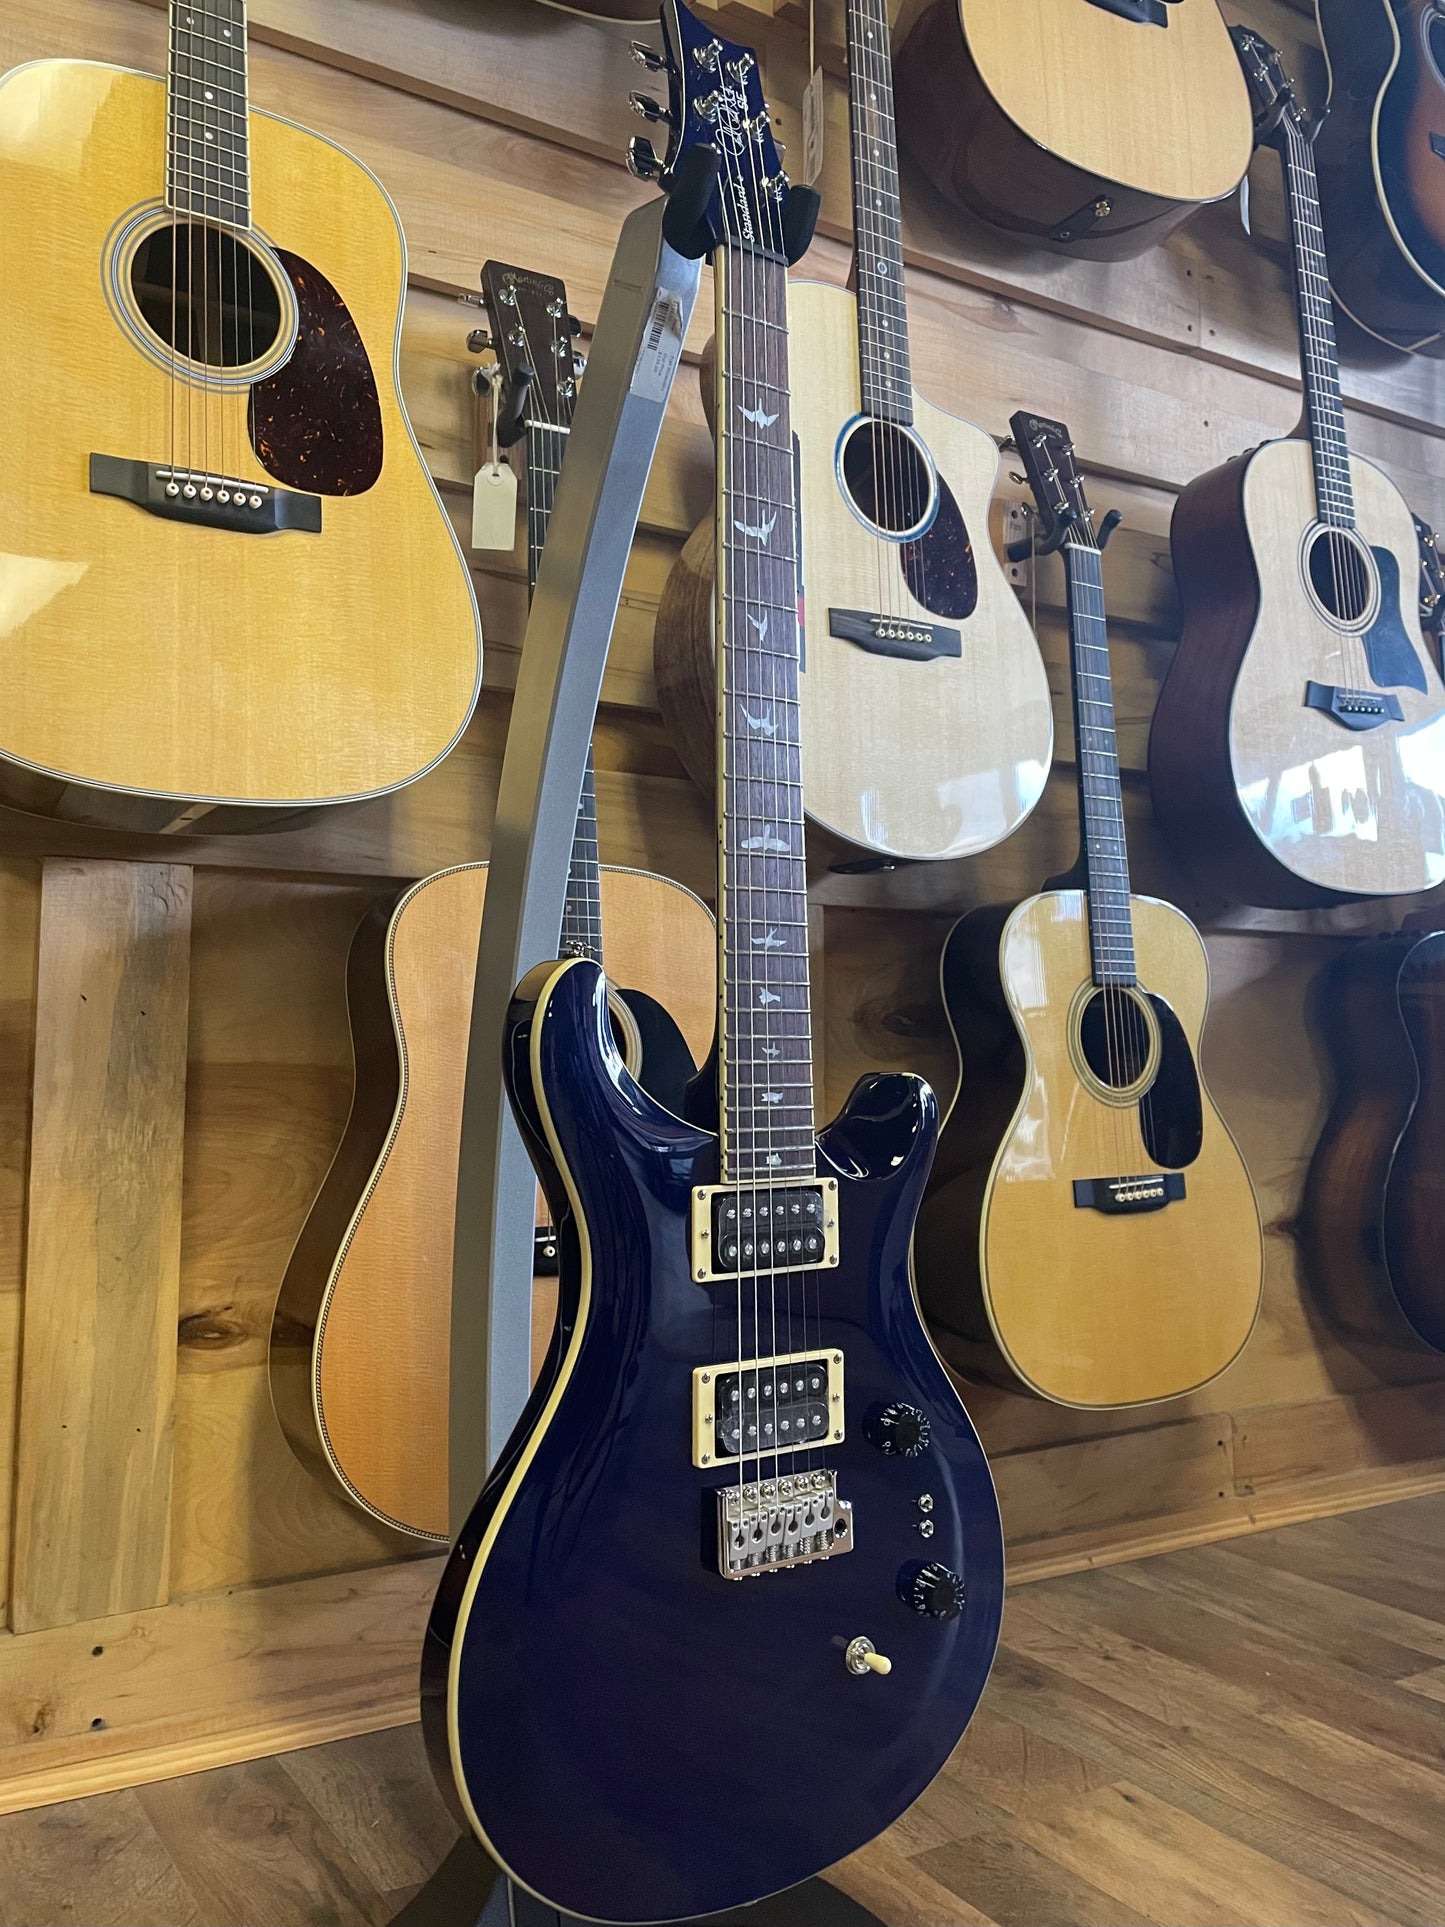 PRS SE Standard 24-08 Electric Guitar - Translucent Blue (NEW)